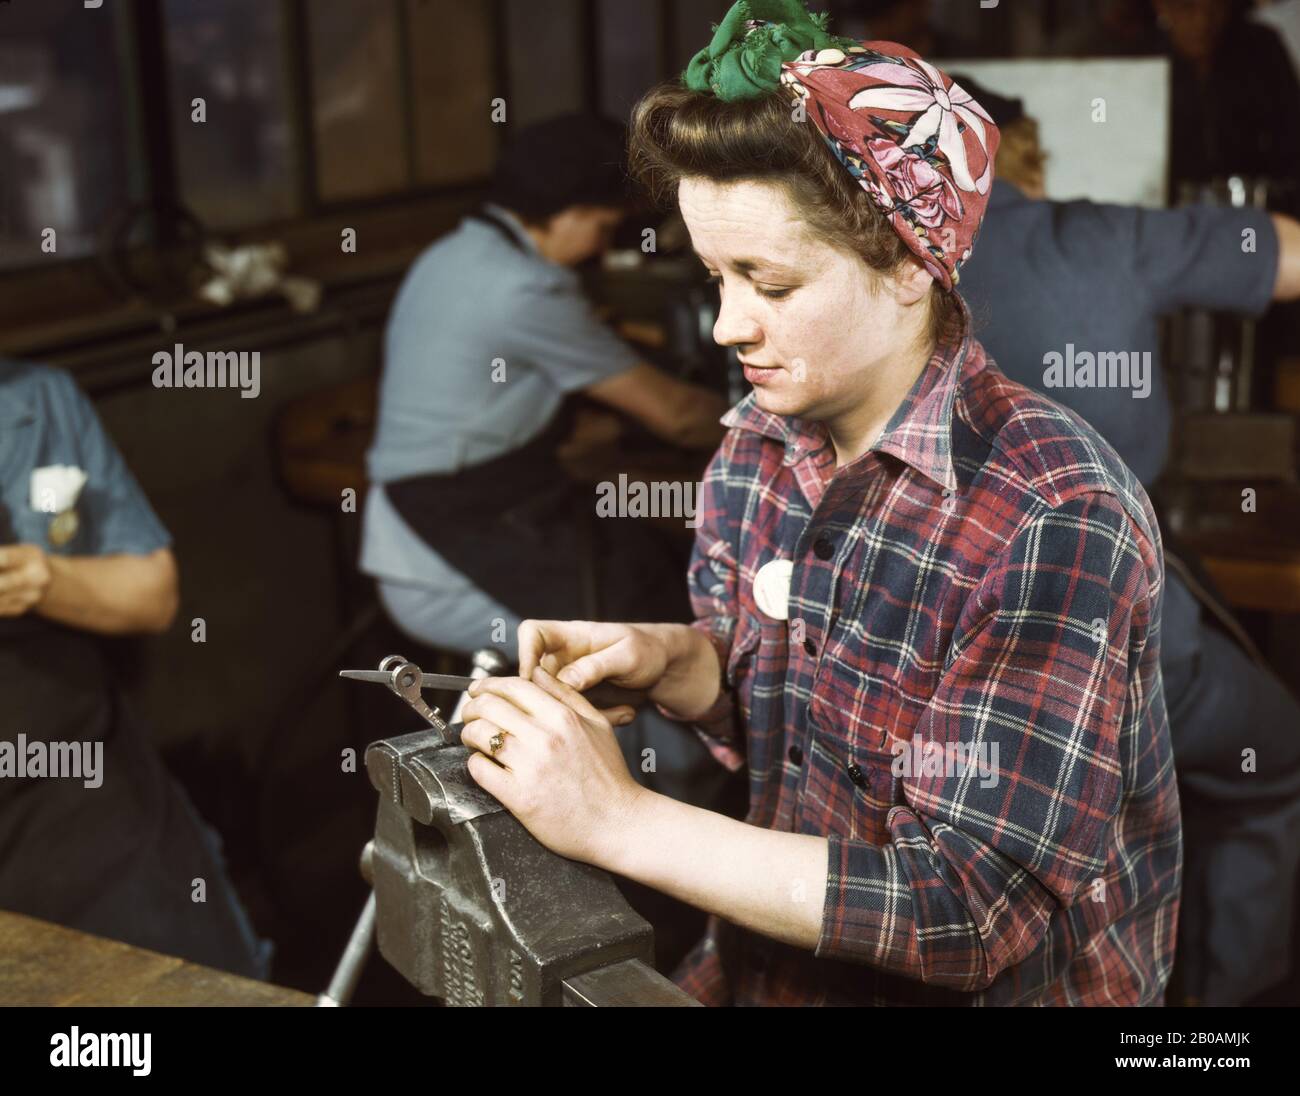 War Production Worker Filing Small Gun Parts, Vilter Manufacturing Company, Milwaukee, Wisconsin, USA, fotografia di Howard R. Hollem, U.S. Office of War Information, febbraio 1943 Foto Stock